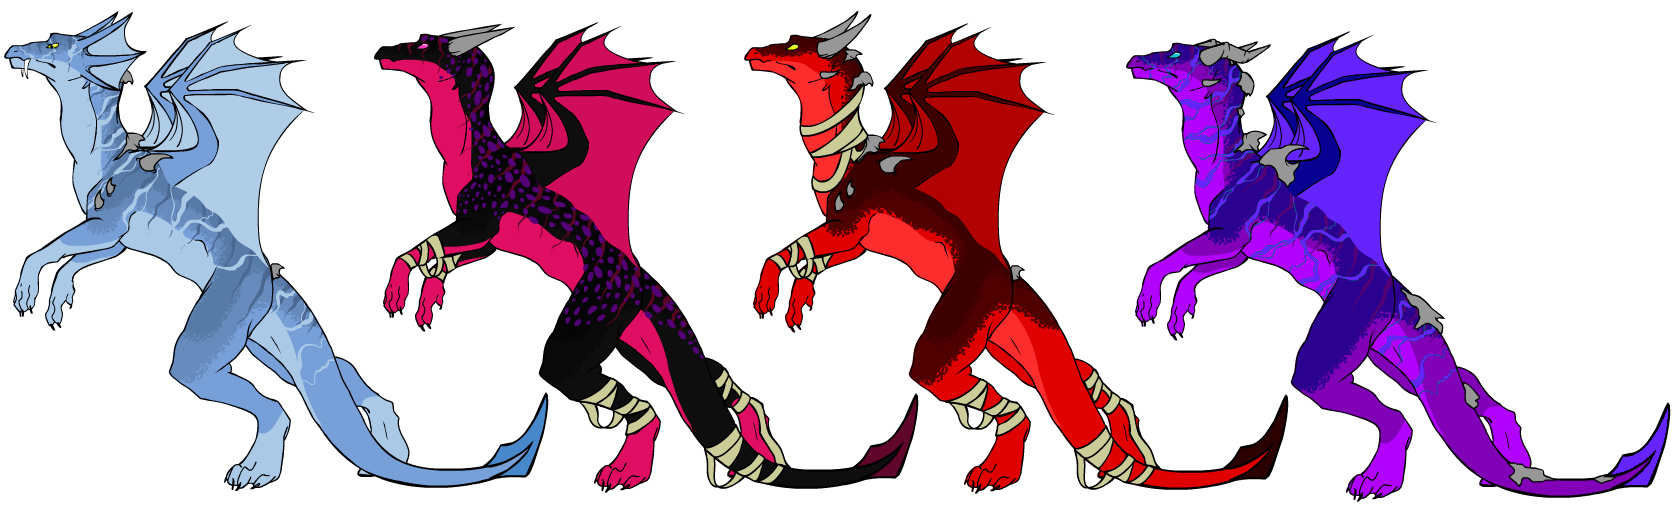 Old Dragon Designs by DragonsOfTheDevil on deviantART